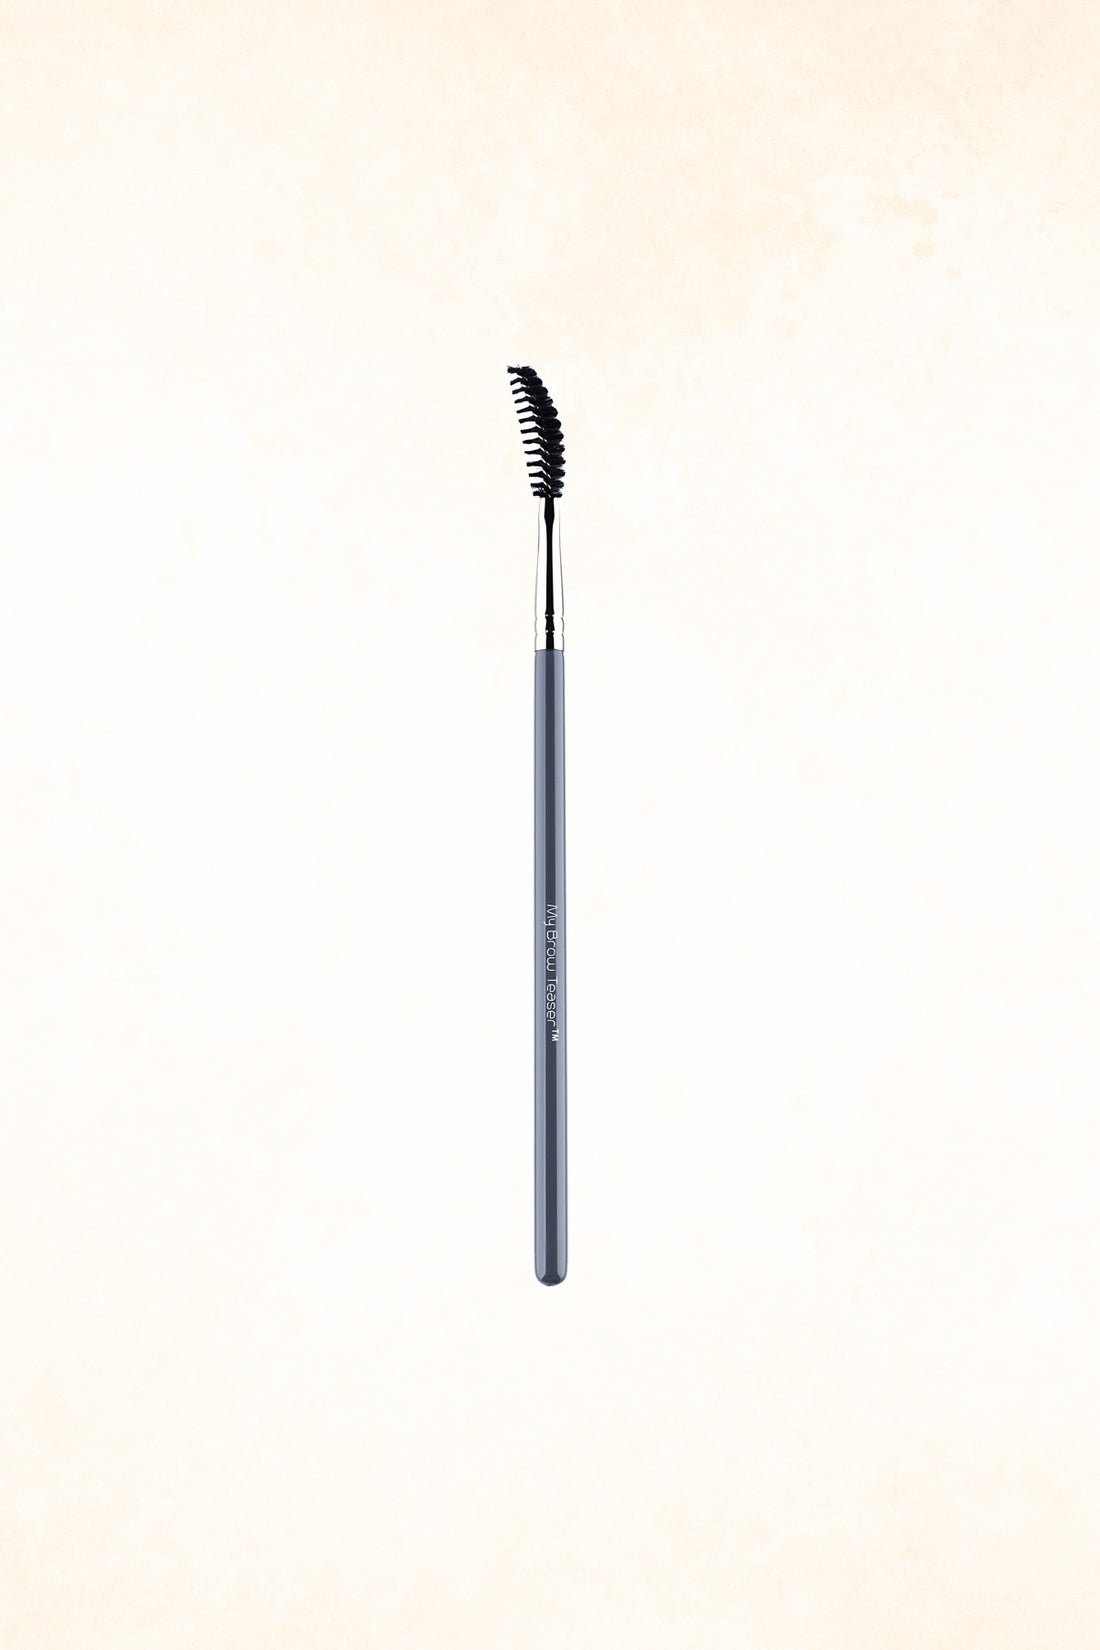 MYKITCO - 2.1 - My Brow Teaser Makeup Brush